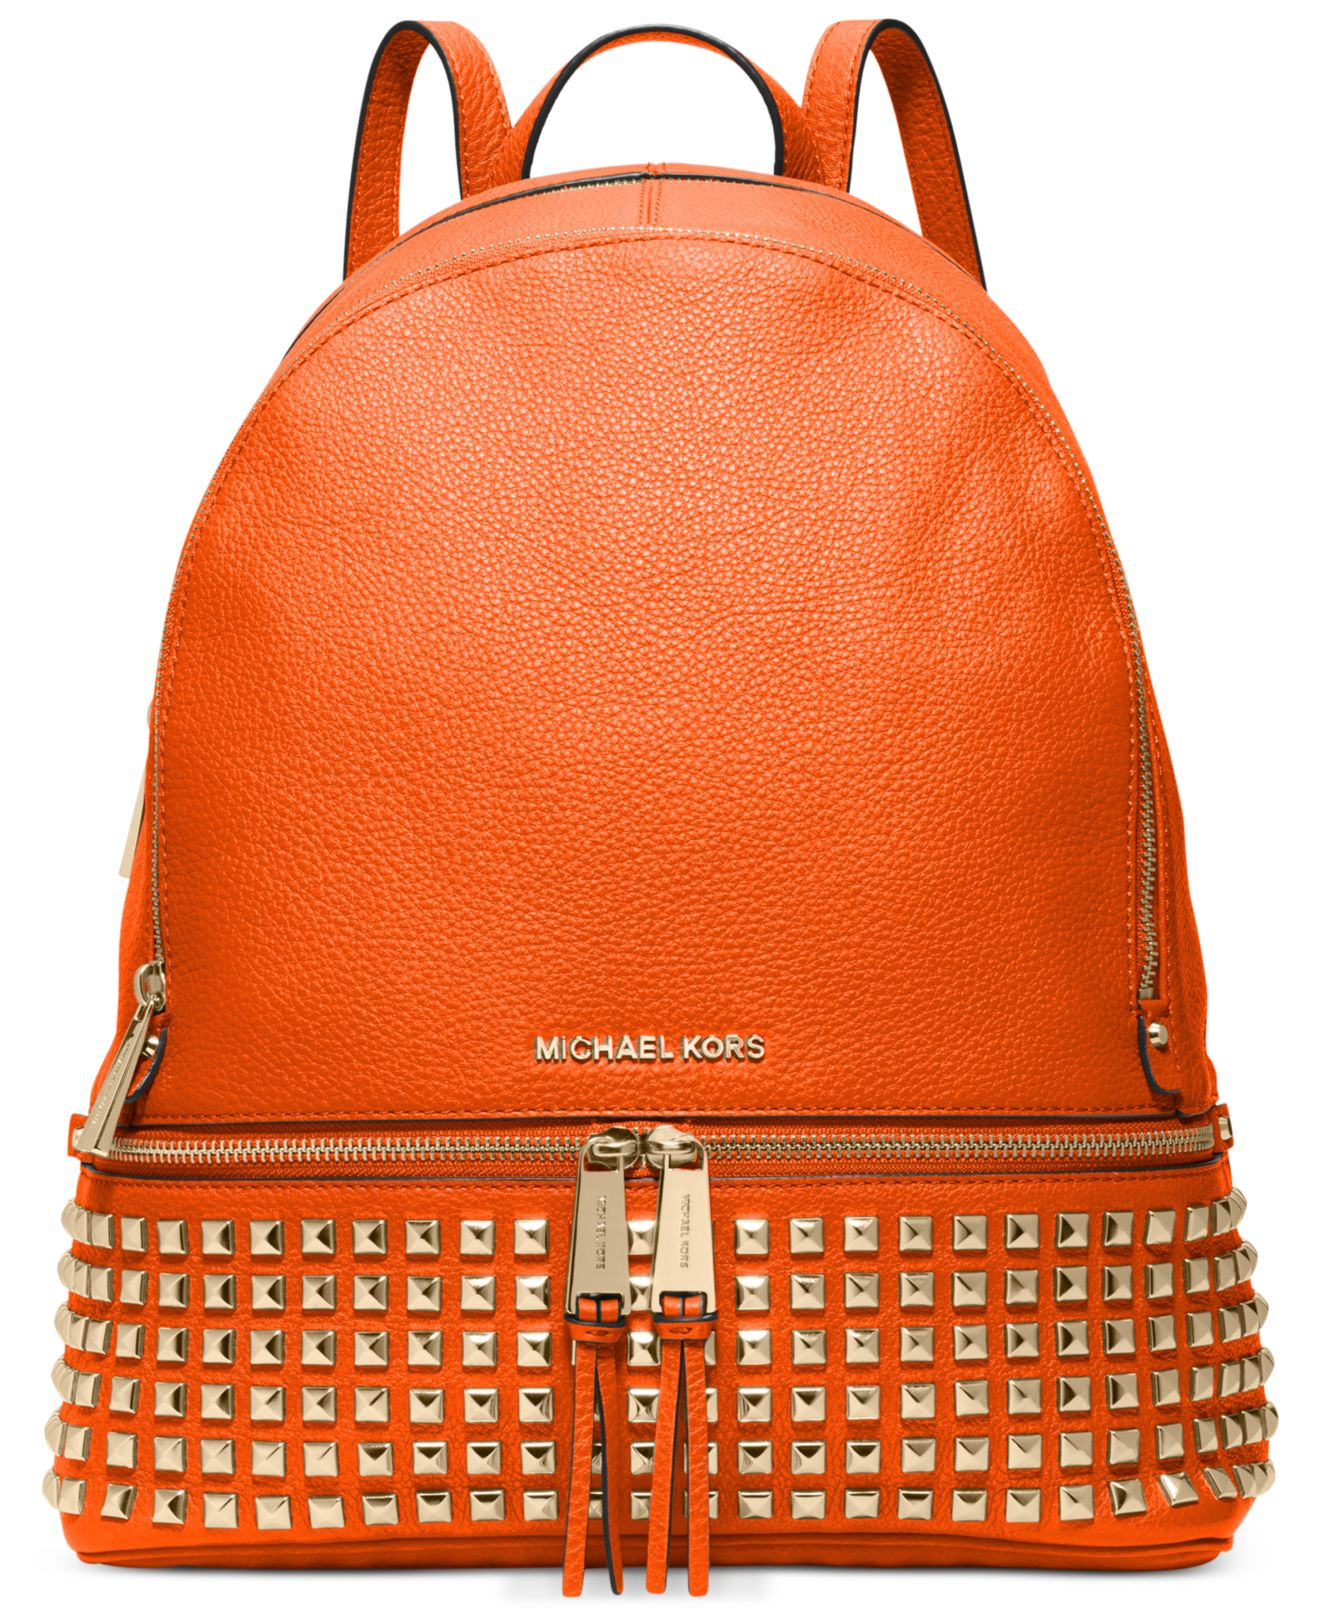 michael kors backpack orange